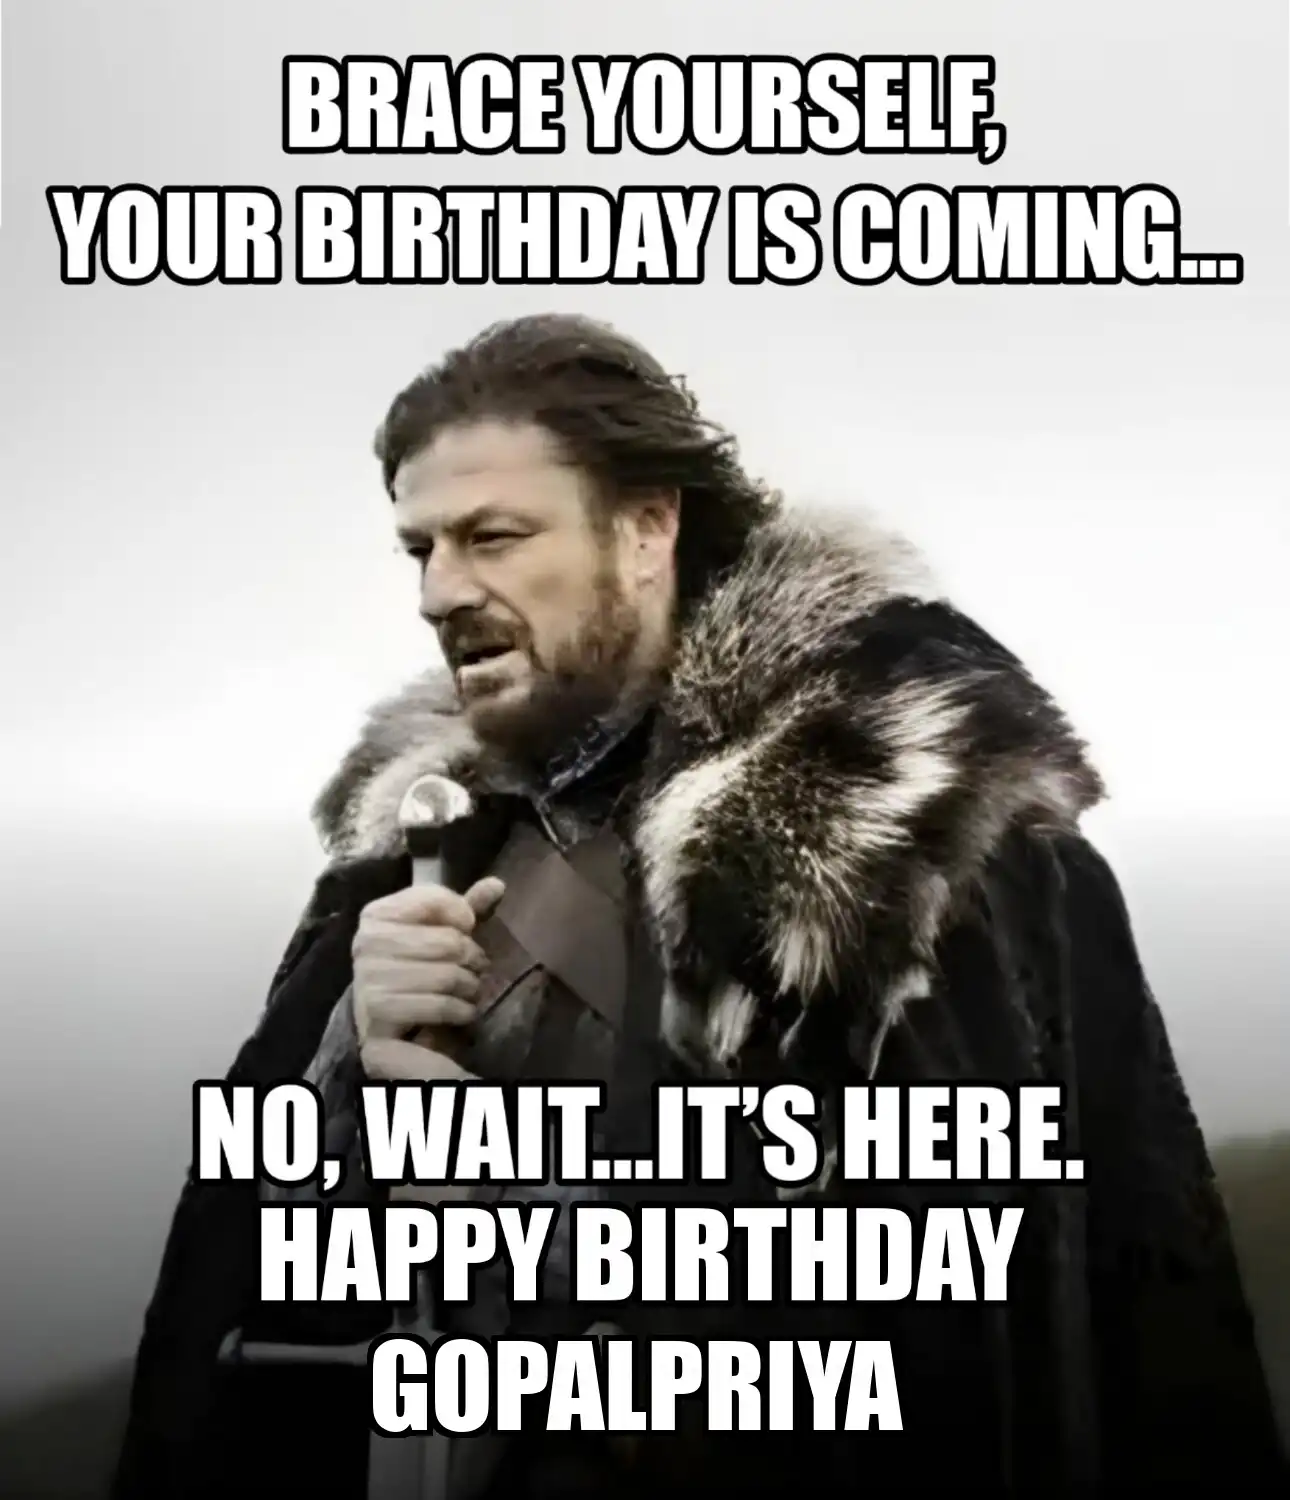 Happy Birthday Gopalpriya Brace Yourself Your Birthday Is Coming Meme